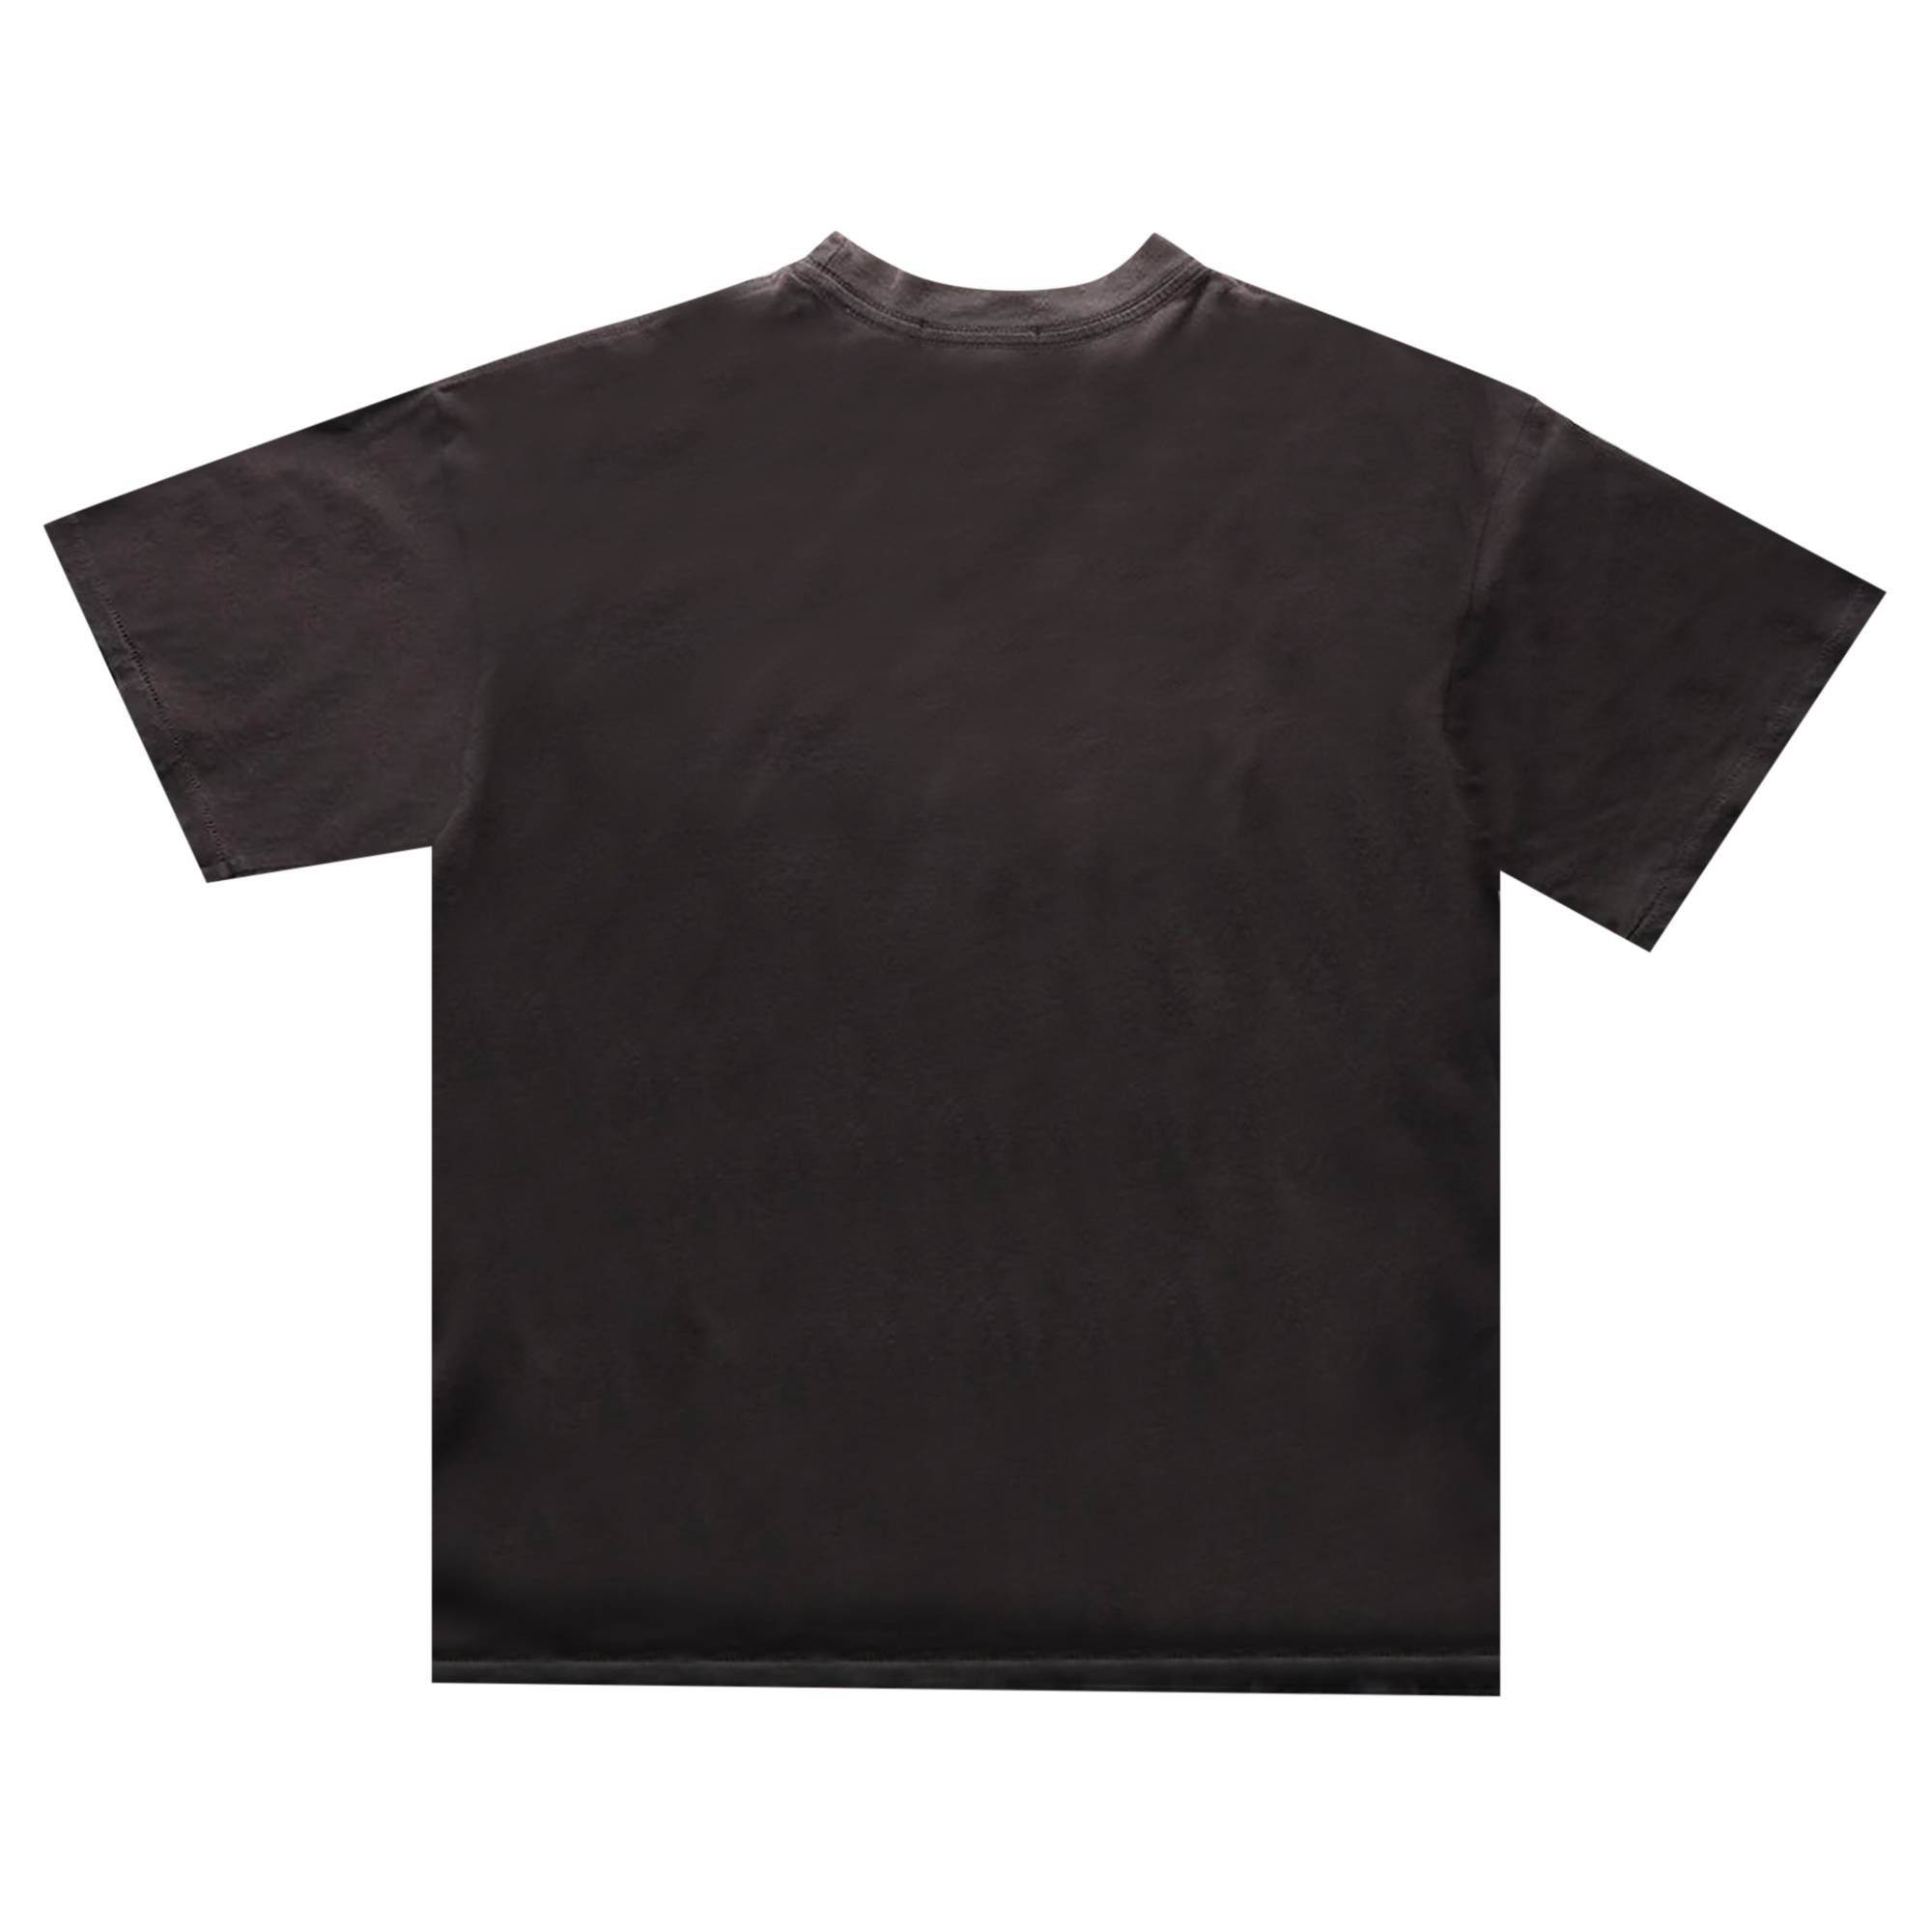 Enfants Riches Déprimés Sleep Sound T-Shirt 'Faded Black/Cream' - 2